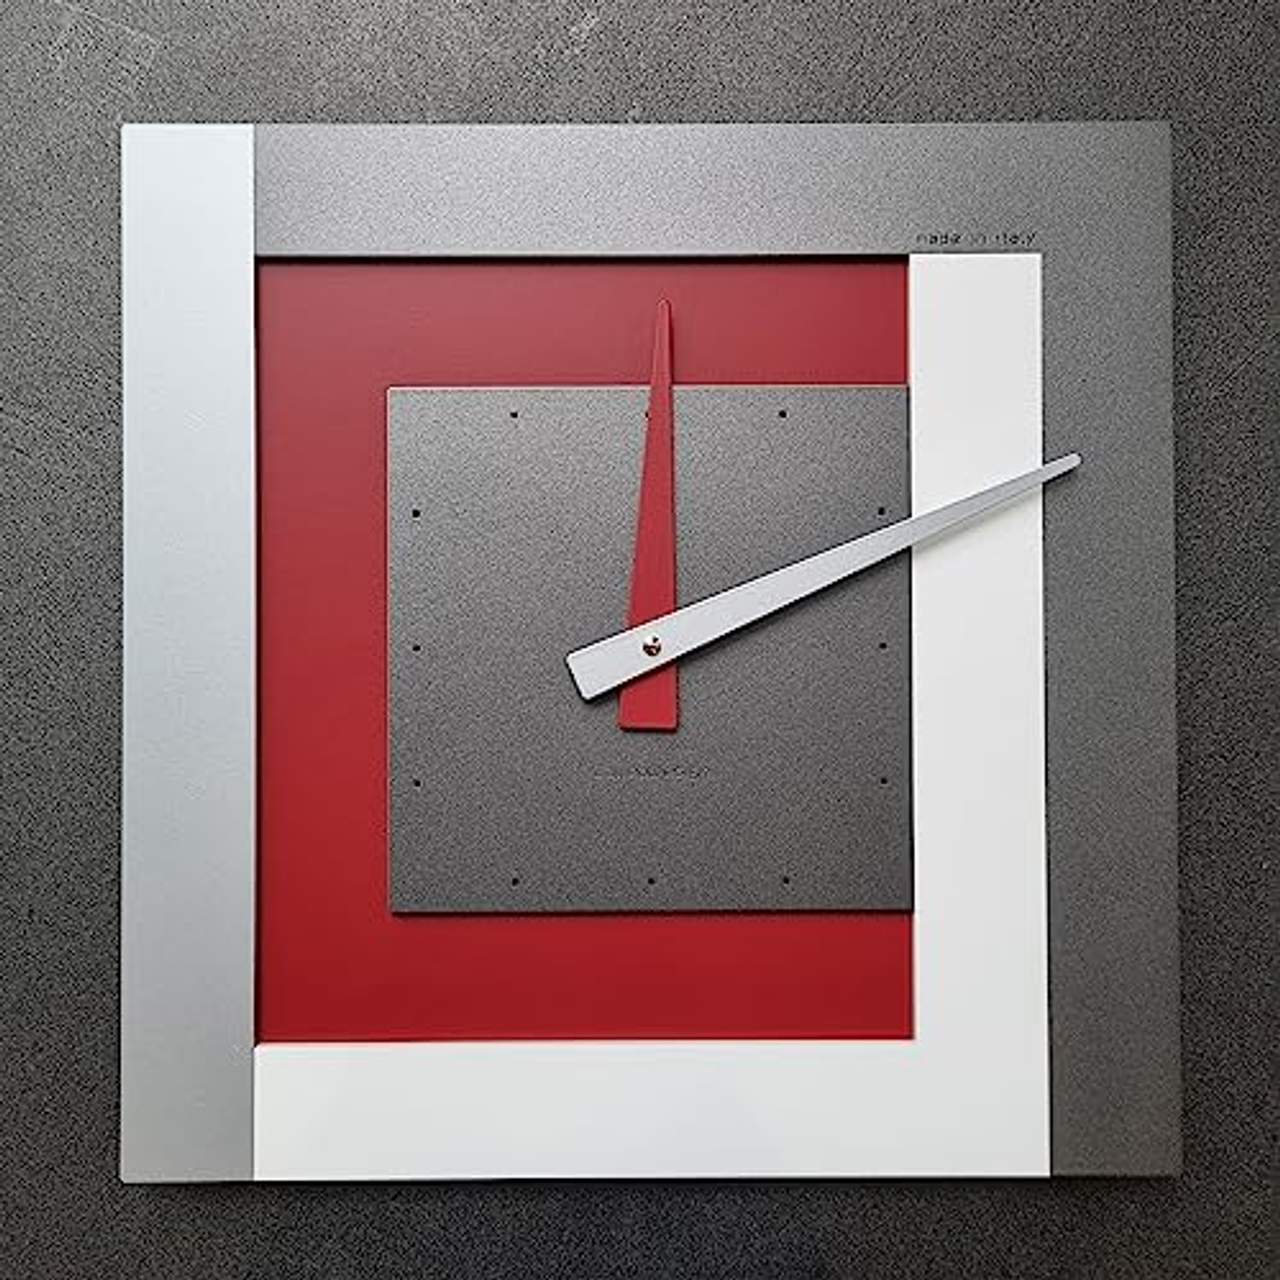 CalleaDesign Clock40 Wanduhr Rubin